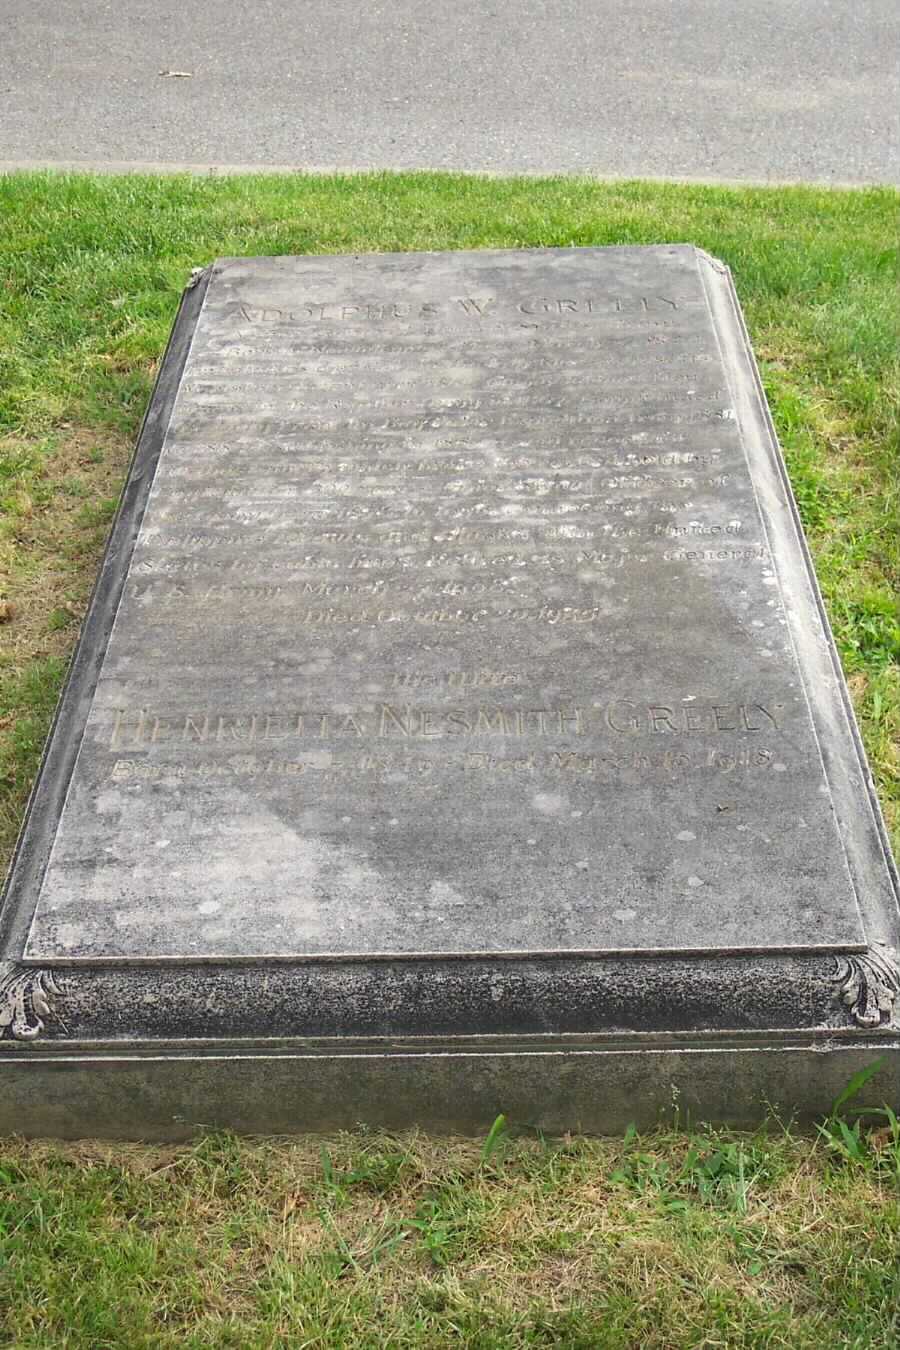 awgreely-gravesite-02-section1-062803